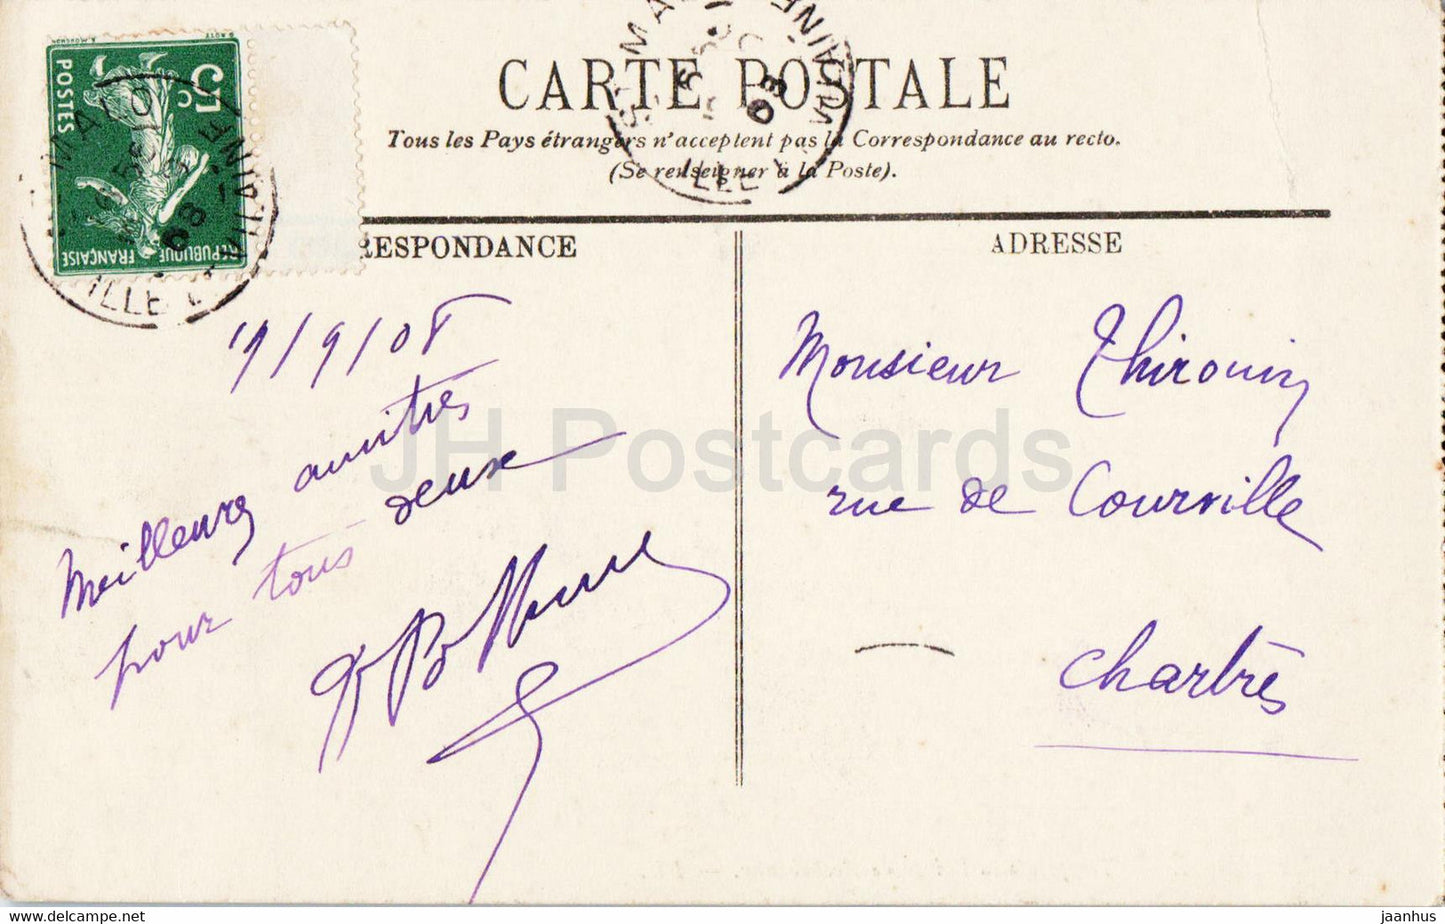 Parame - Tempete a la Pointe de Rochebonne - 42 - old postcard - 1908 - France - used